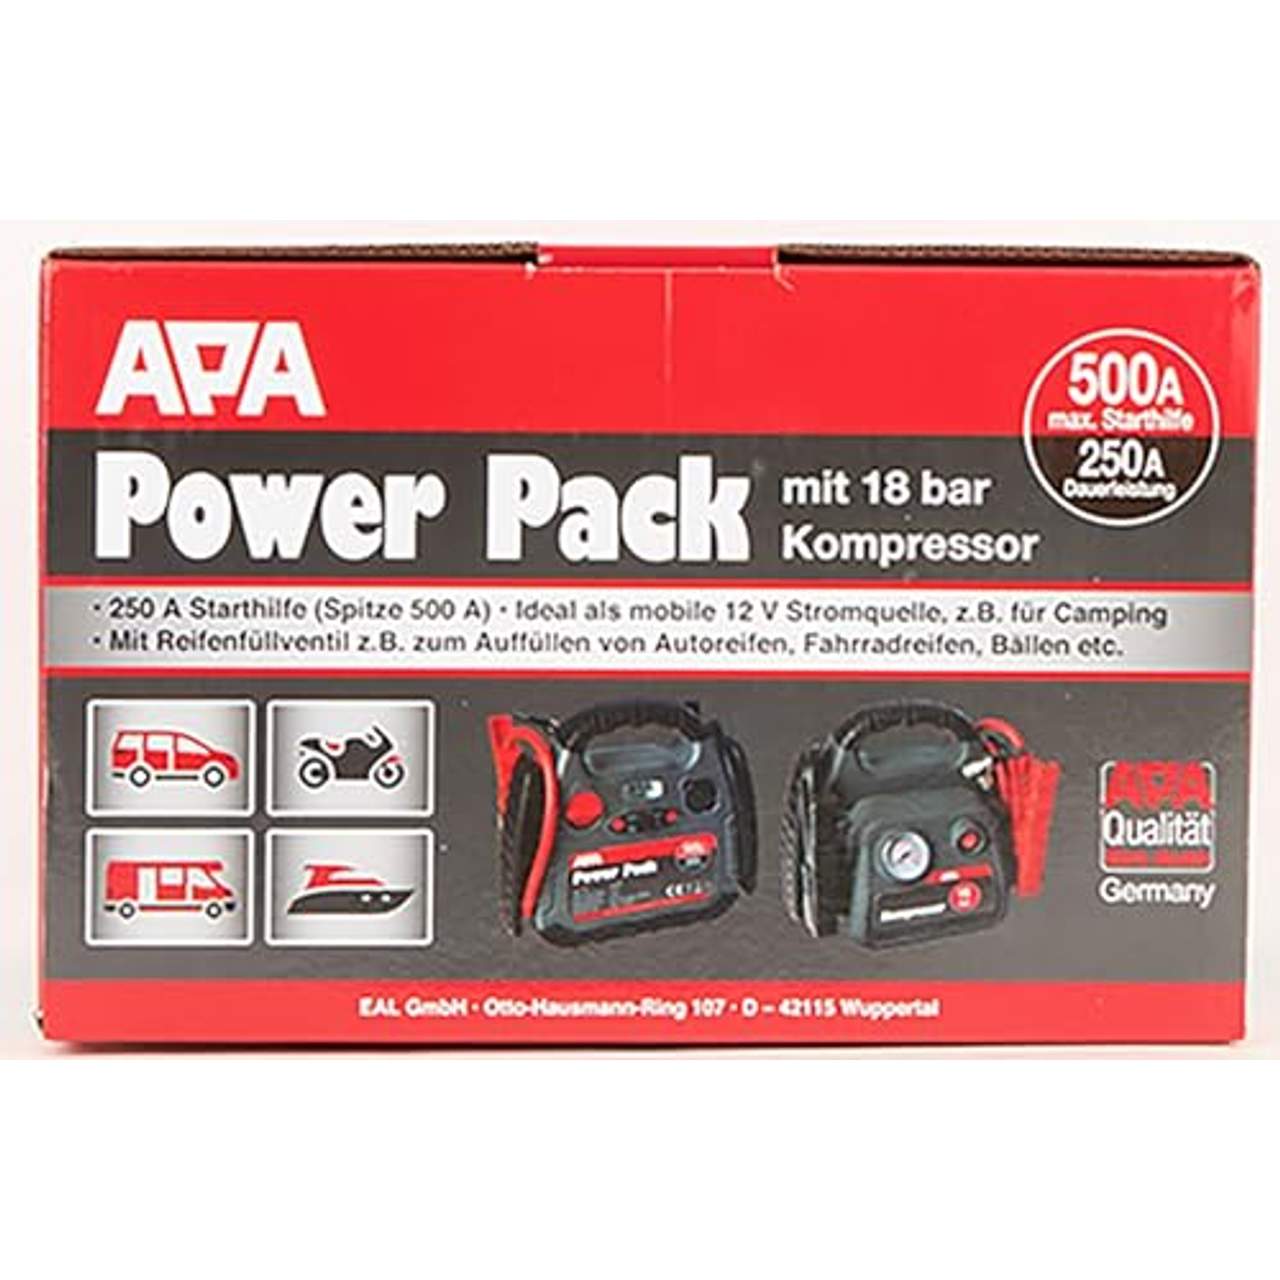 APA 16540 Powerpak mit Kompressor 18 bar